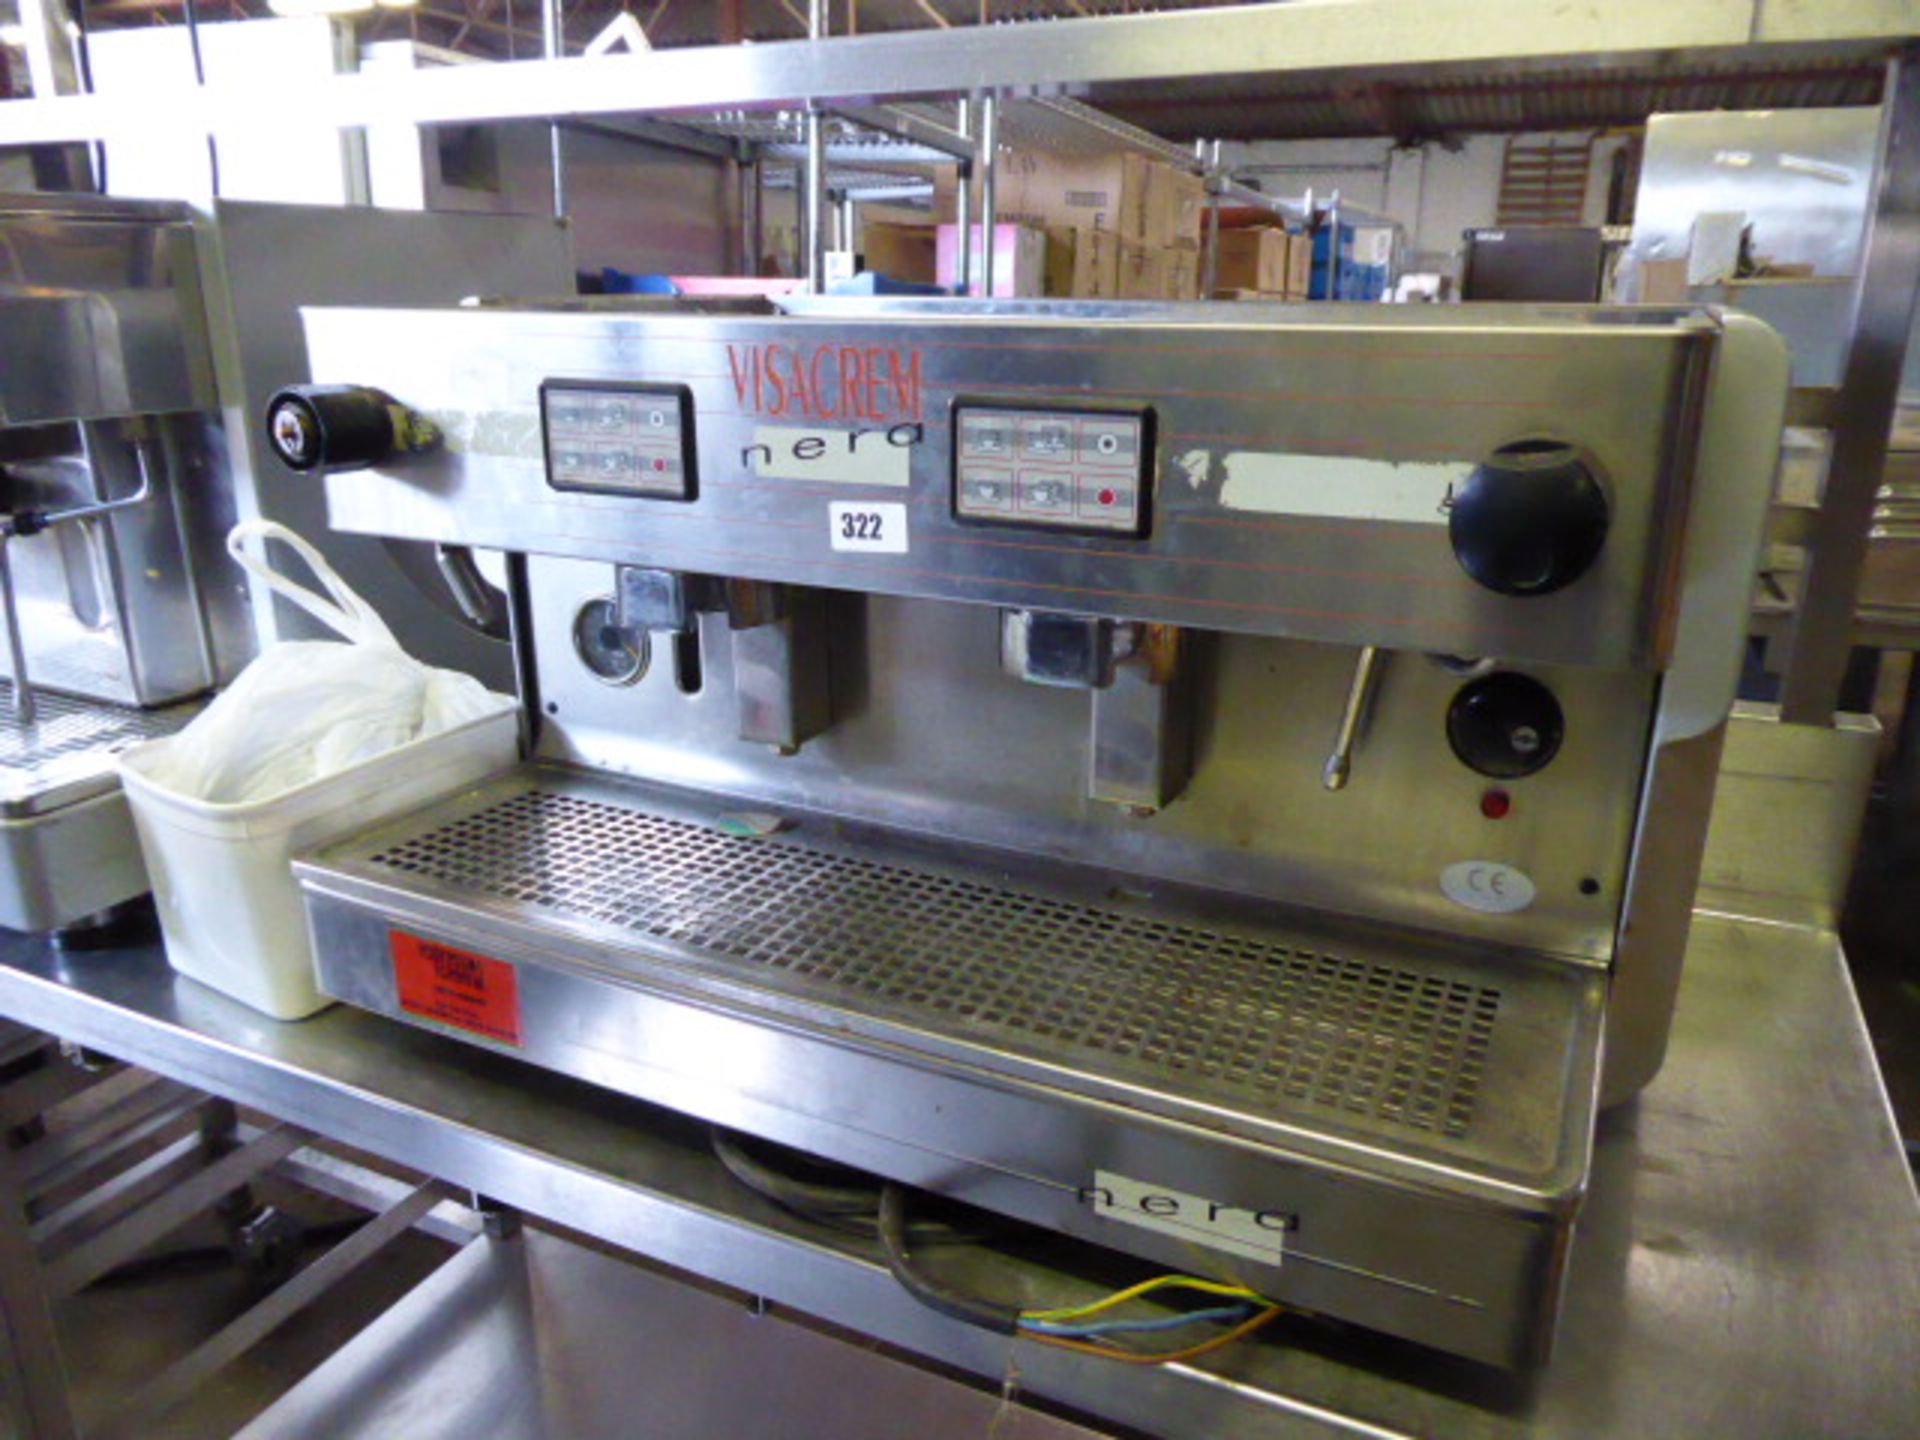 70cm Visacrem Nera automatic 2 station coffee machine, no group heads